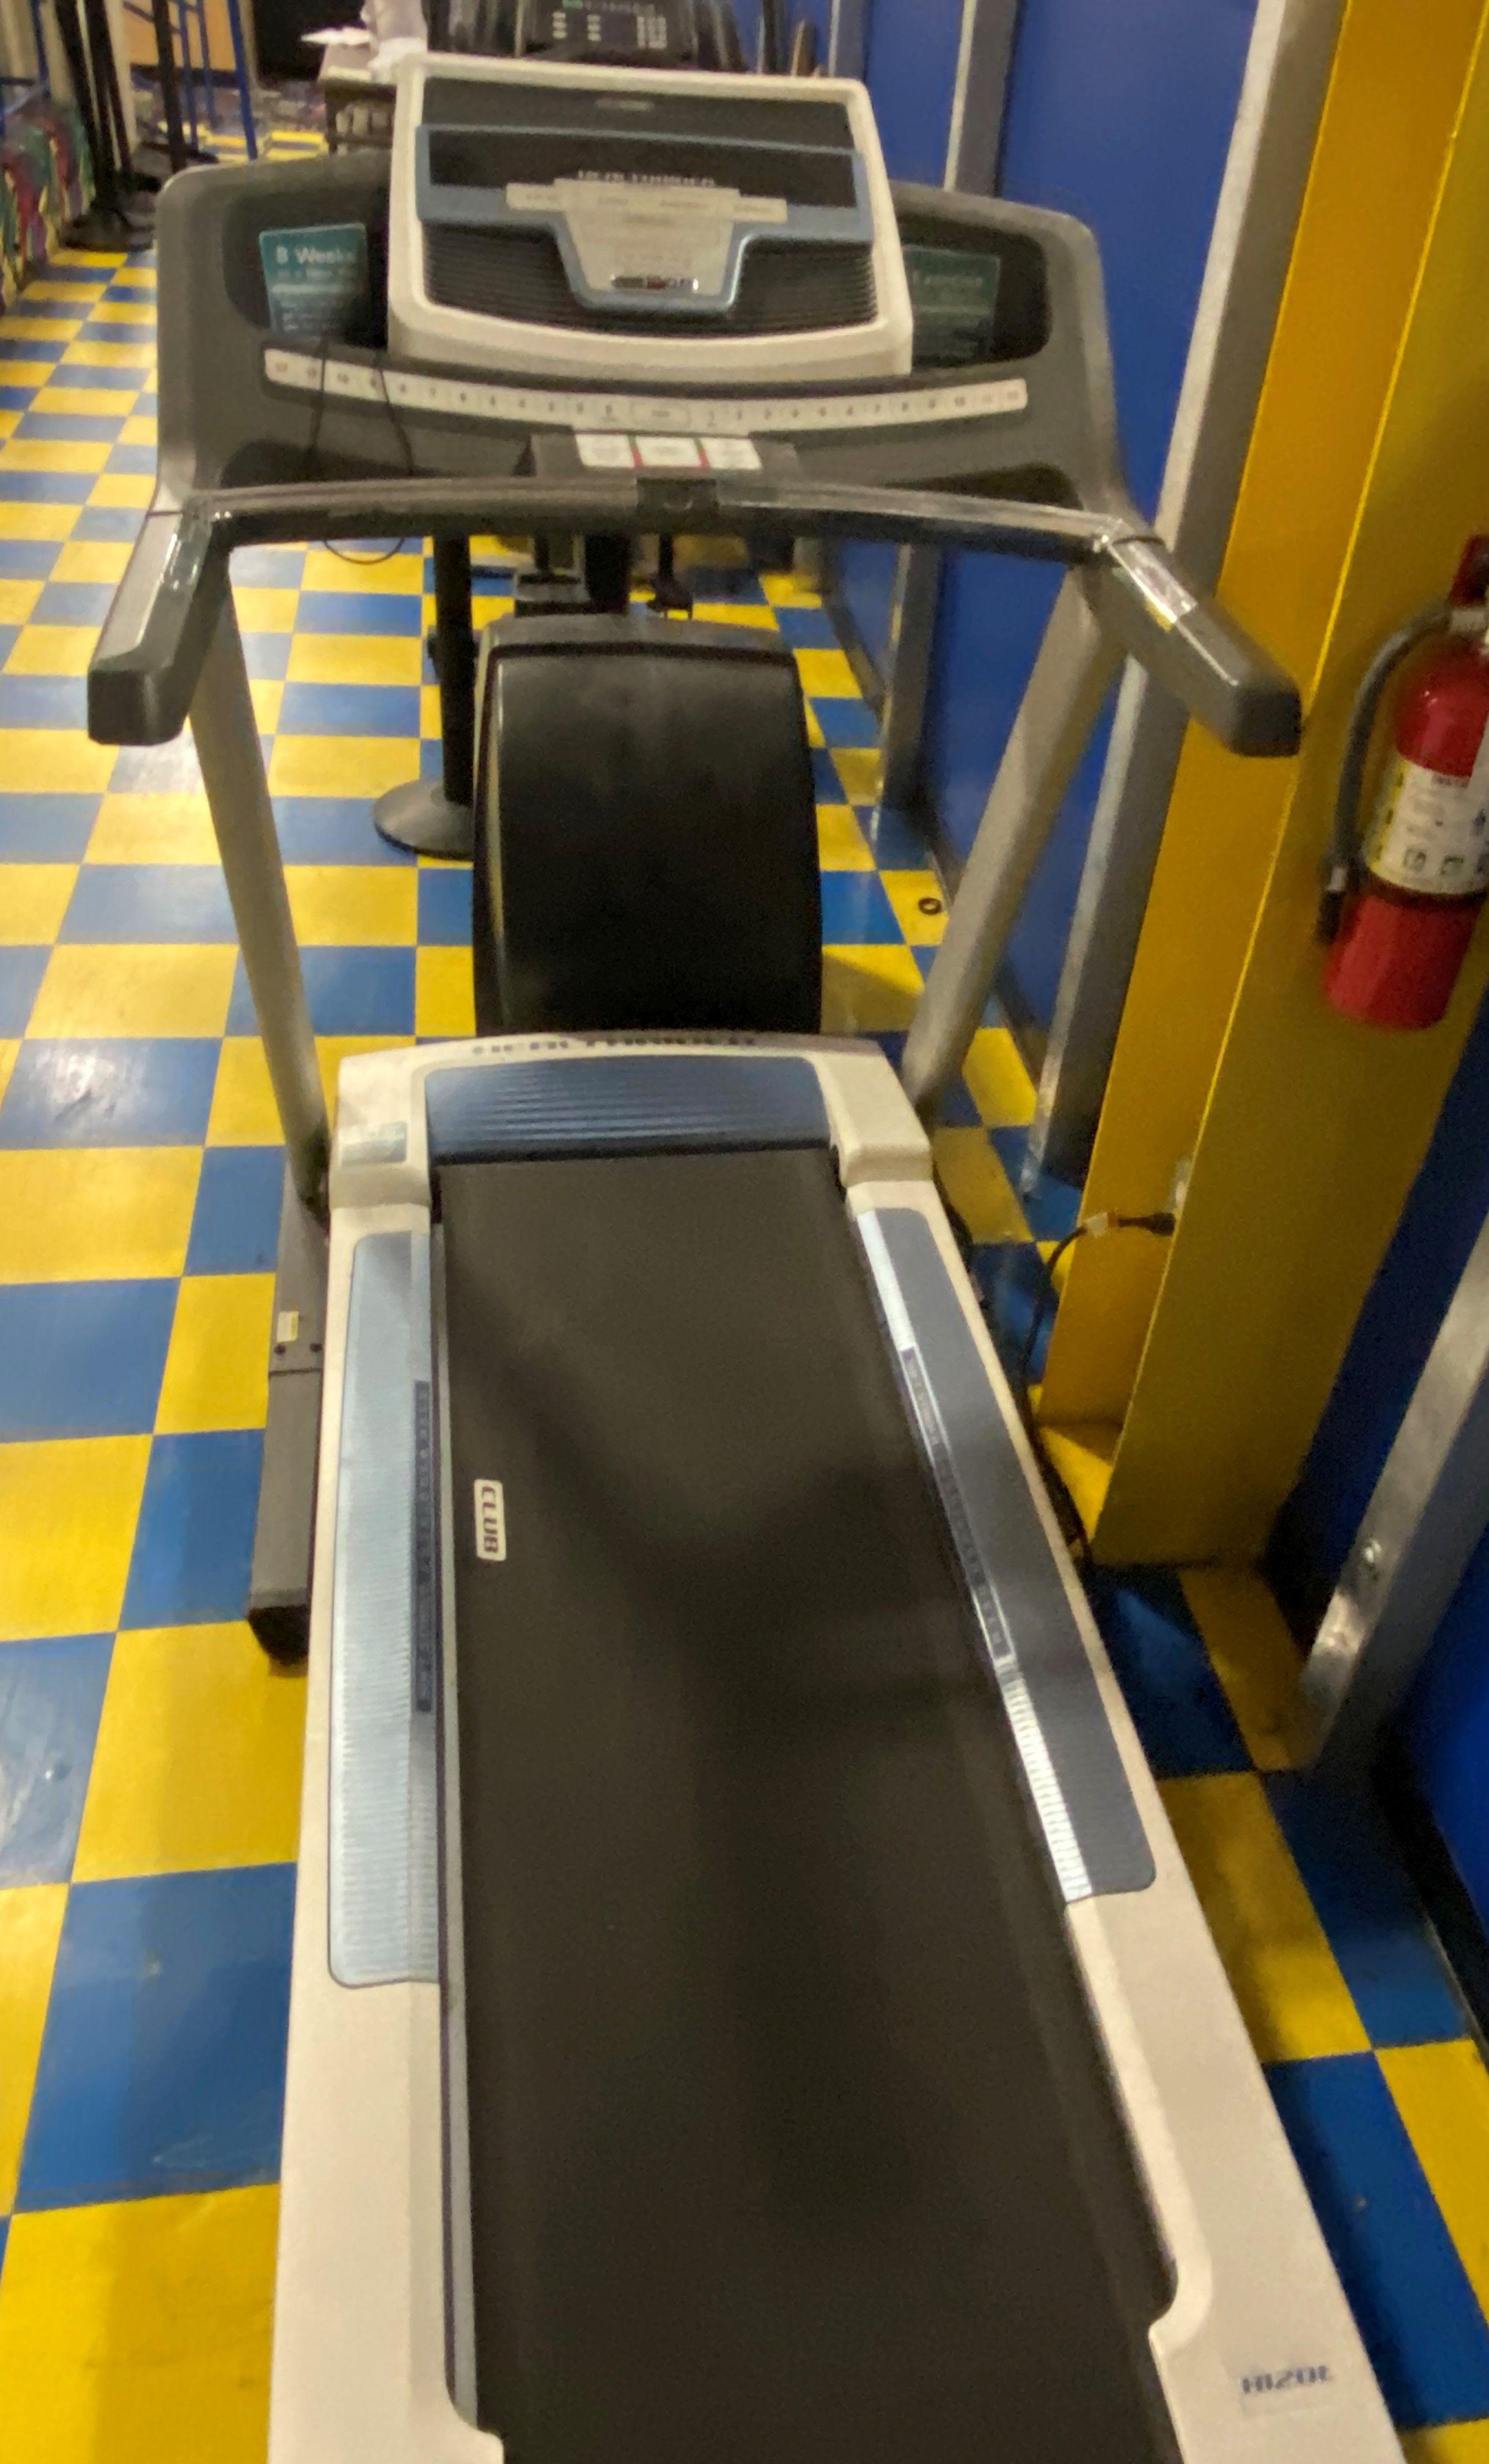 Healthrider Treadmill with Soft Strider Cushioned Deck